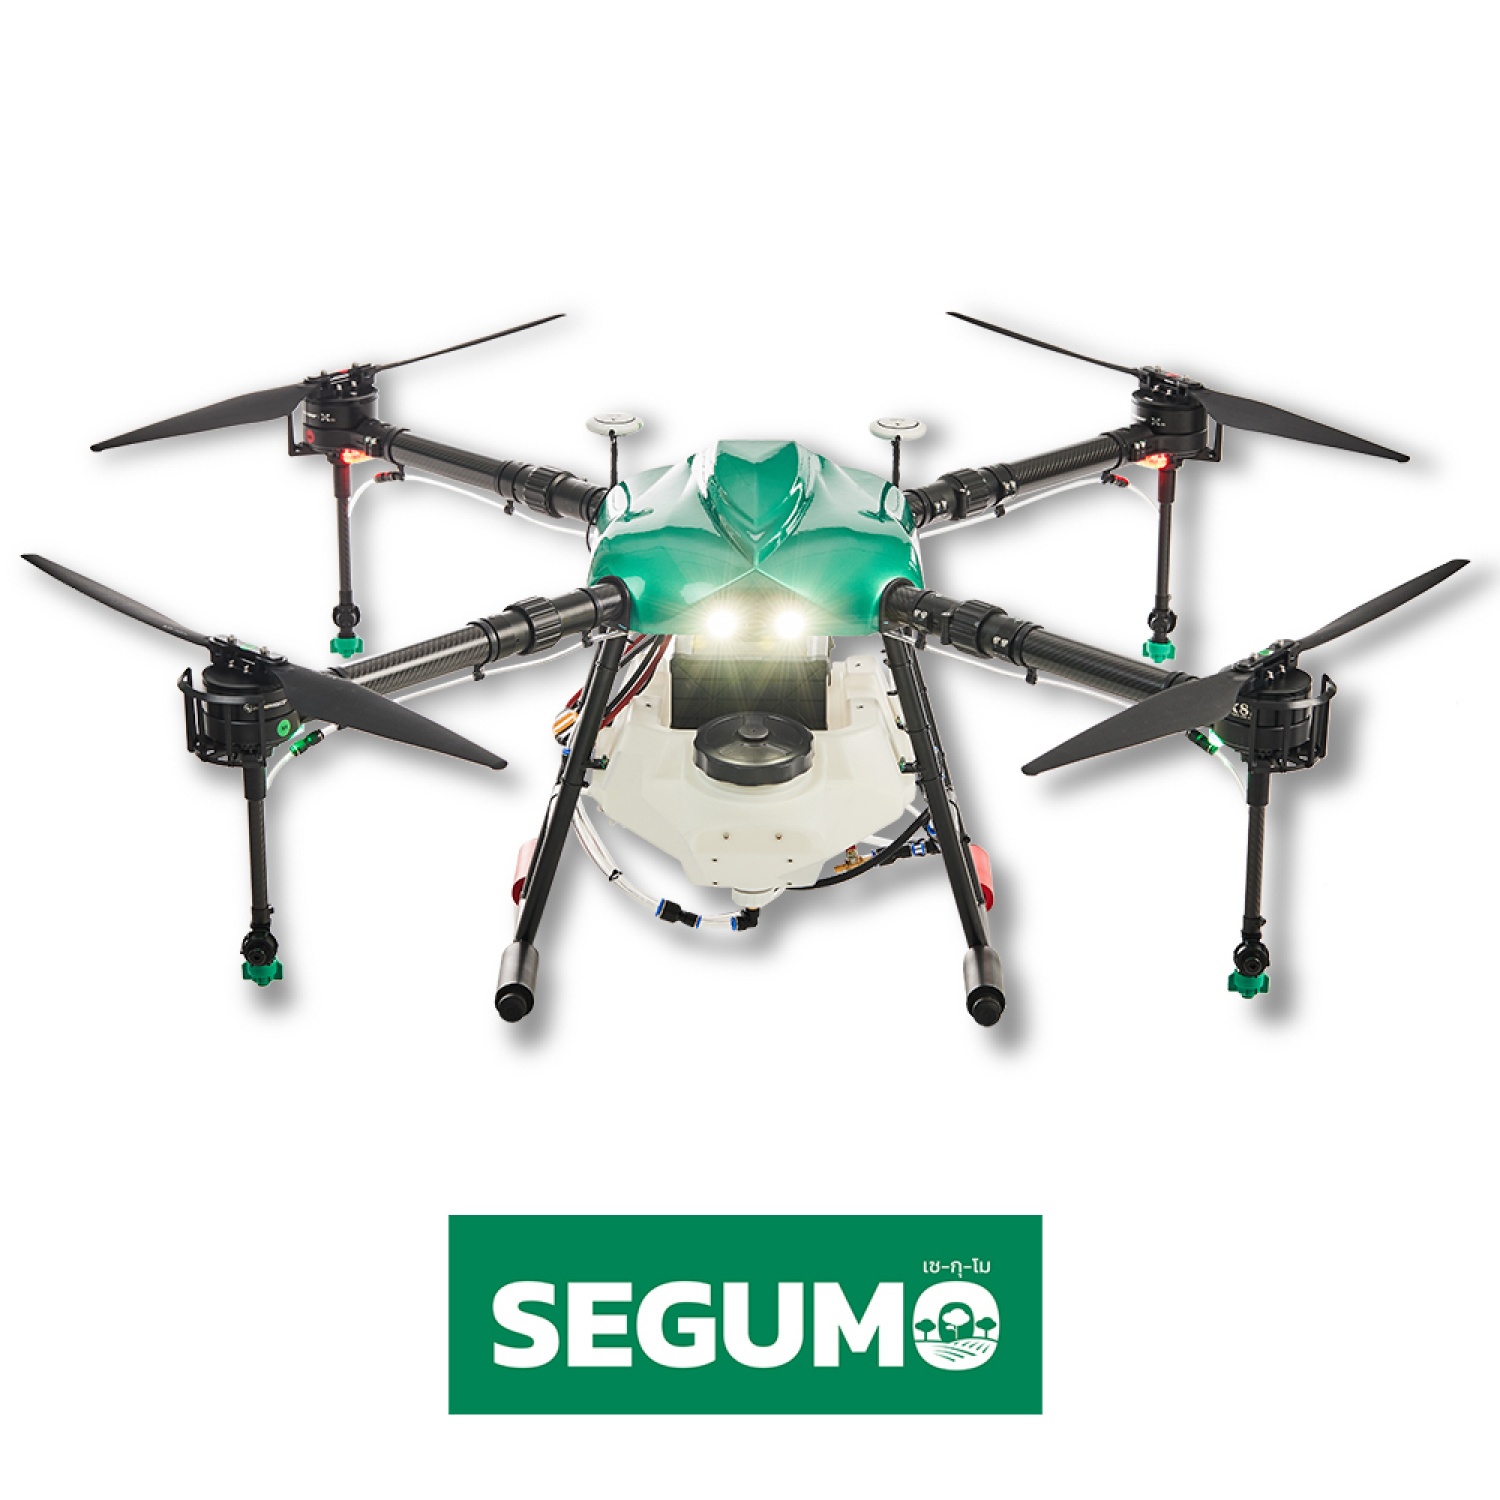 Segumo โดรนการเกษตร รุ่น SG-10L Pro พร้อมเครื่องชาร์จและแบตเตอรี่ 2ลูก